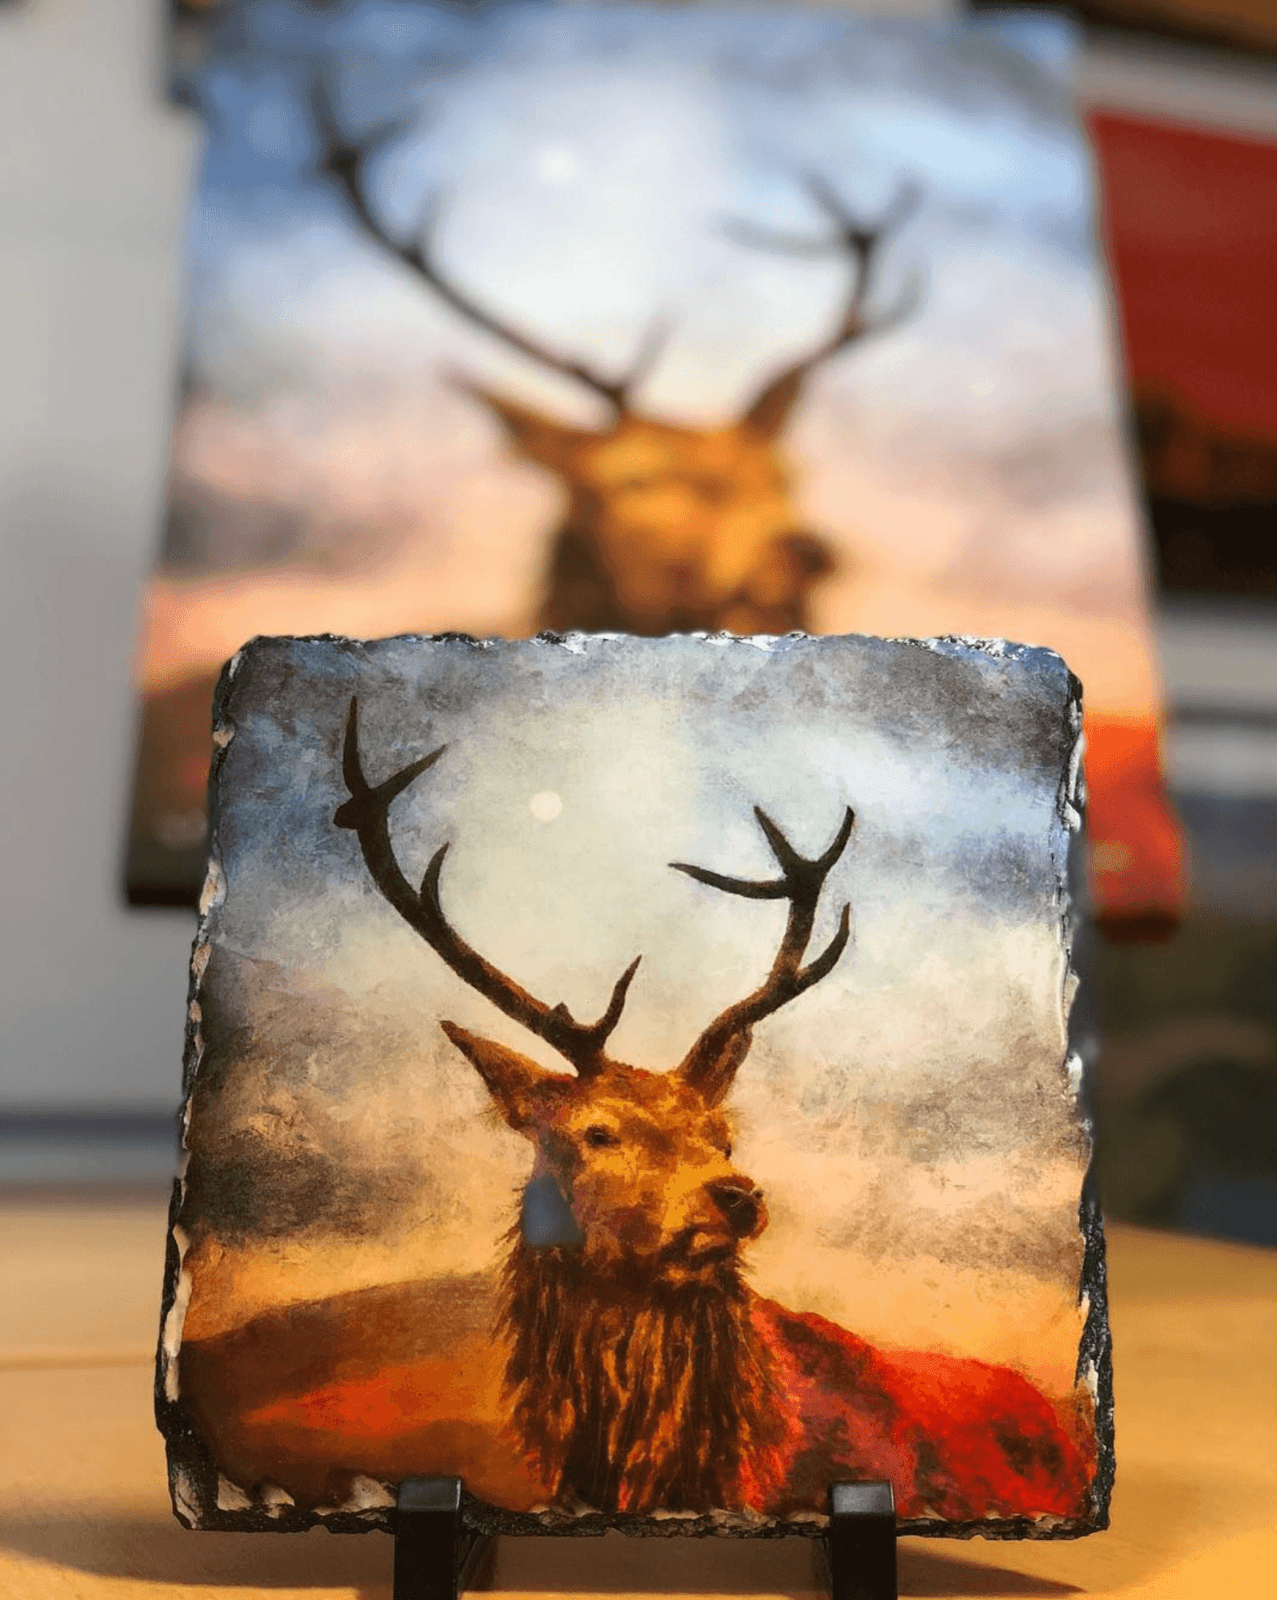 The Brooding Cuillin Scottish Slate Art-Slate Art-Skye Art Gallery-Paintings, Prints, Homeware, Art Gifts From Scotland By Scottish Artist Kevin Hunter